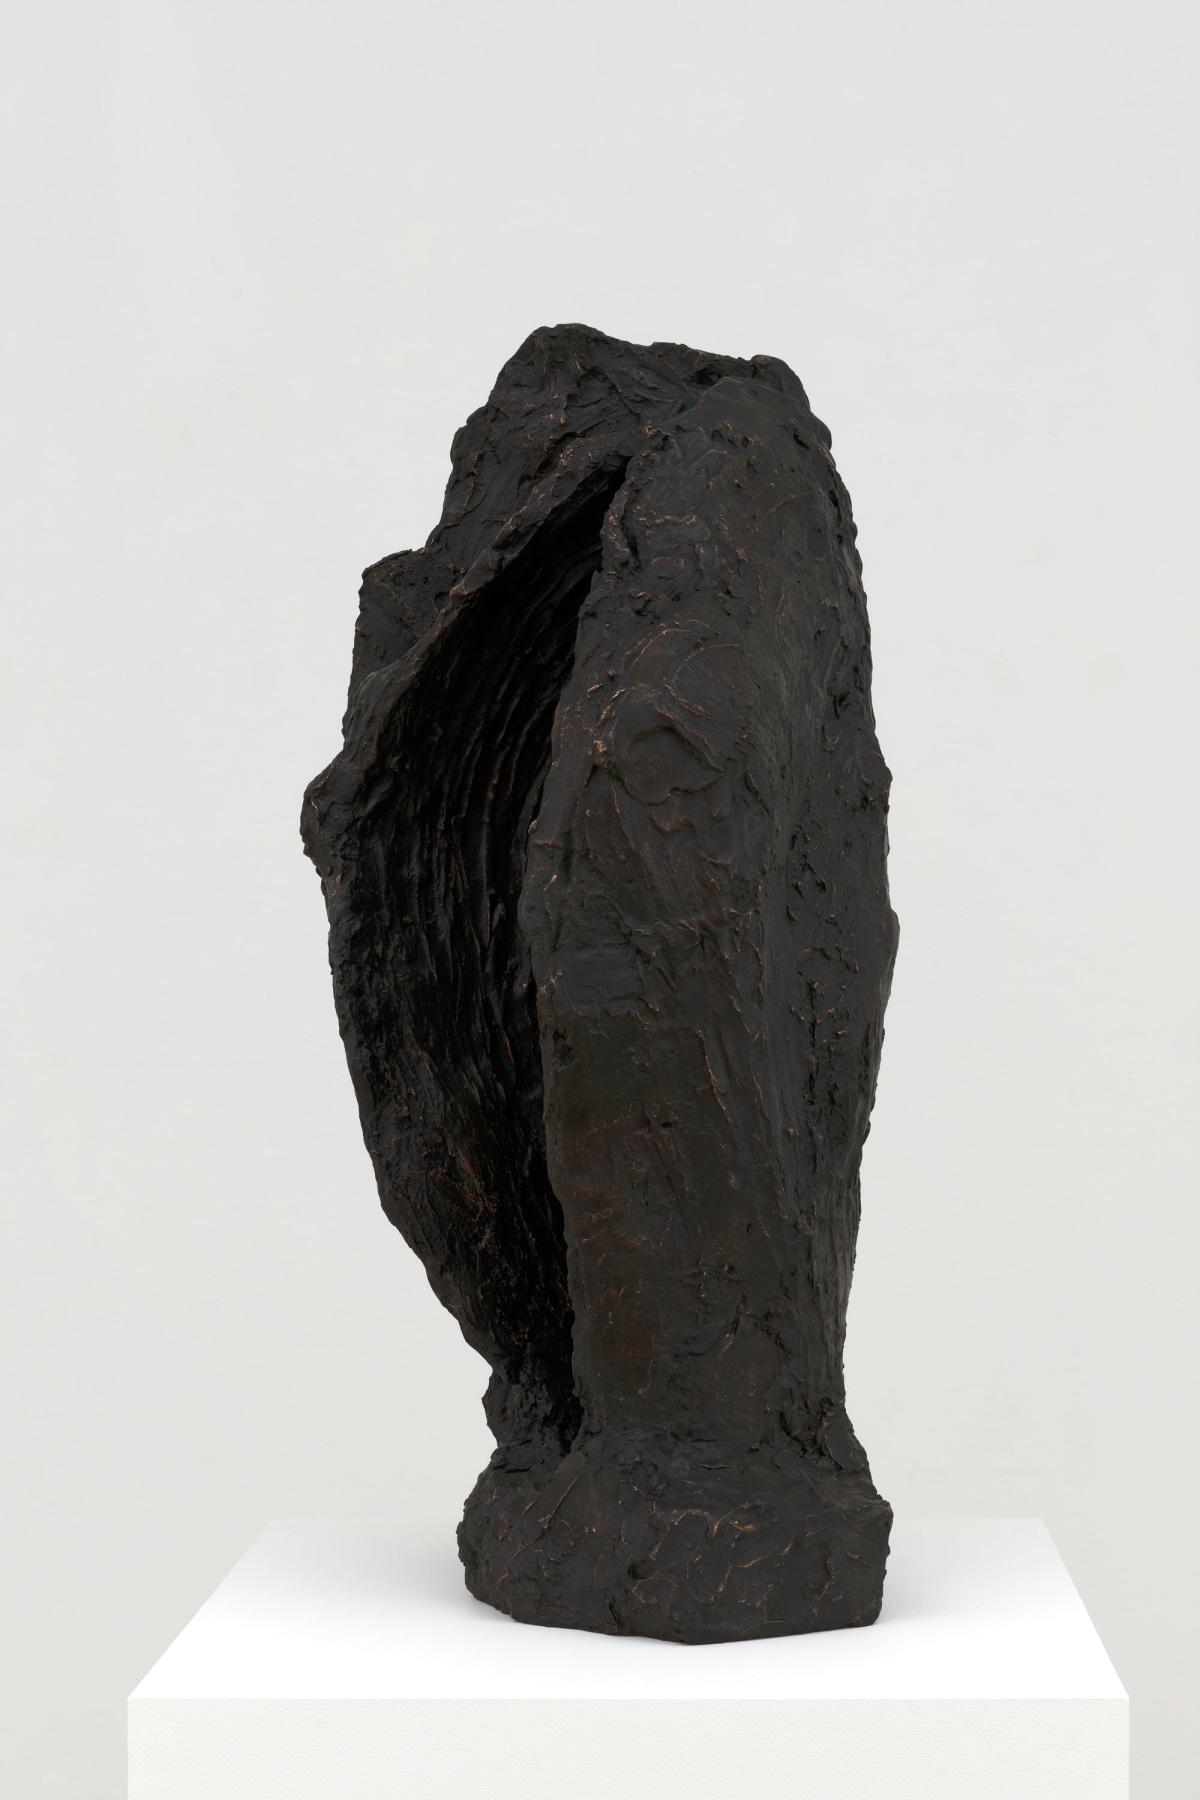 Per Kirkeby

&amp;ldquo;Laeso - Kopf II&amp;rdquo;, 1983

Bronze

From an edition of 6 + 1 AP

35 3/4 x 17&amp;nbsp;x 15 3/4 inches

91 x 43 x 40 cm

PKK 21/3